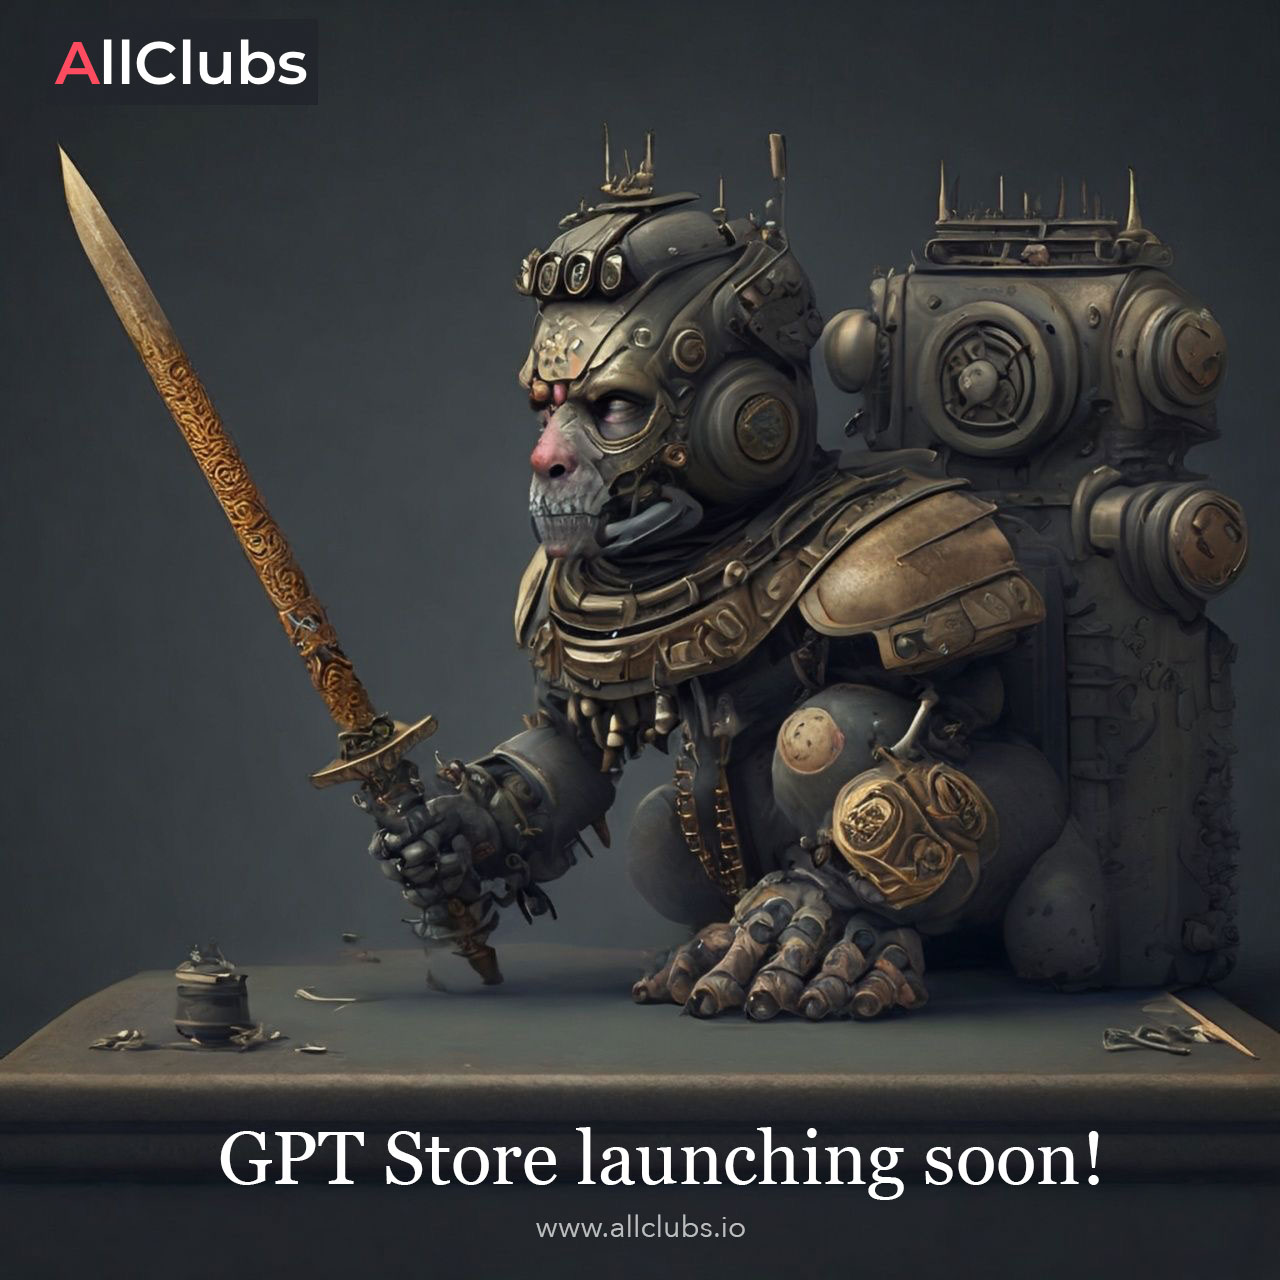 GPT Store launching soon!